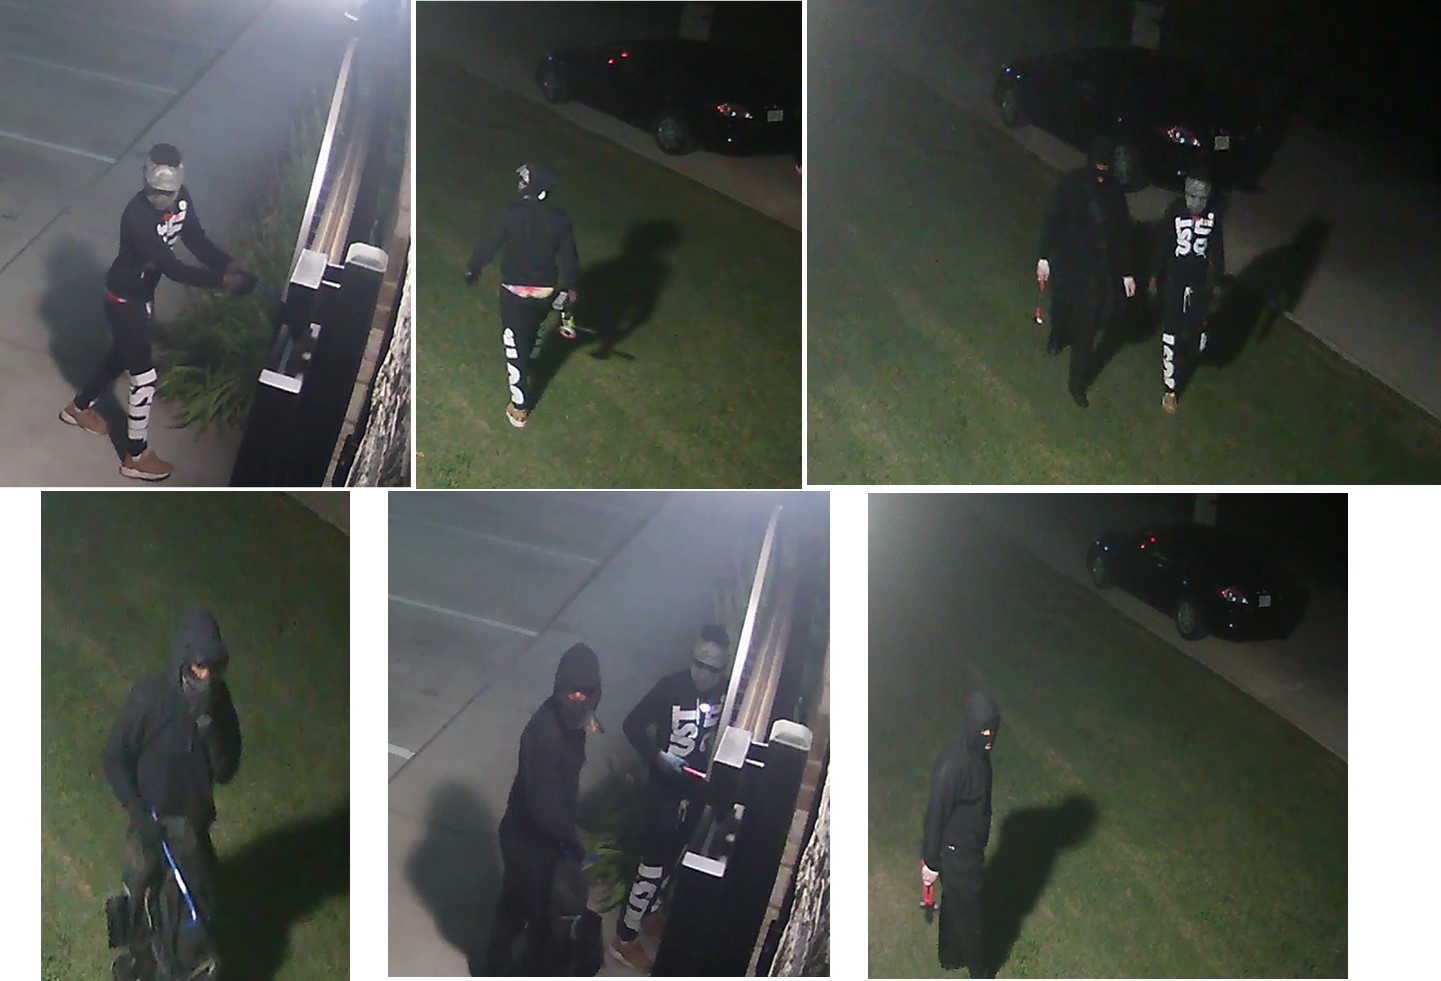 Tres sospechosos enmascarados, vestidos de negro, querían por irrumpir en Marksmen Firearms